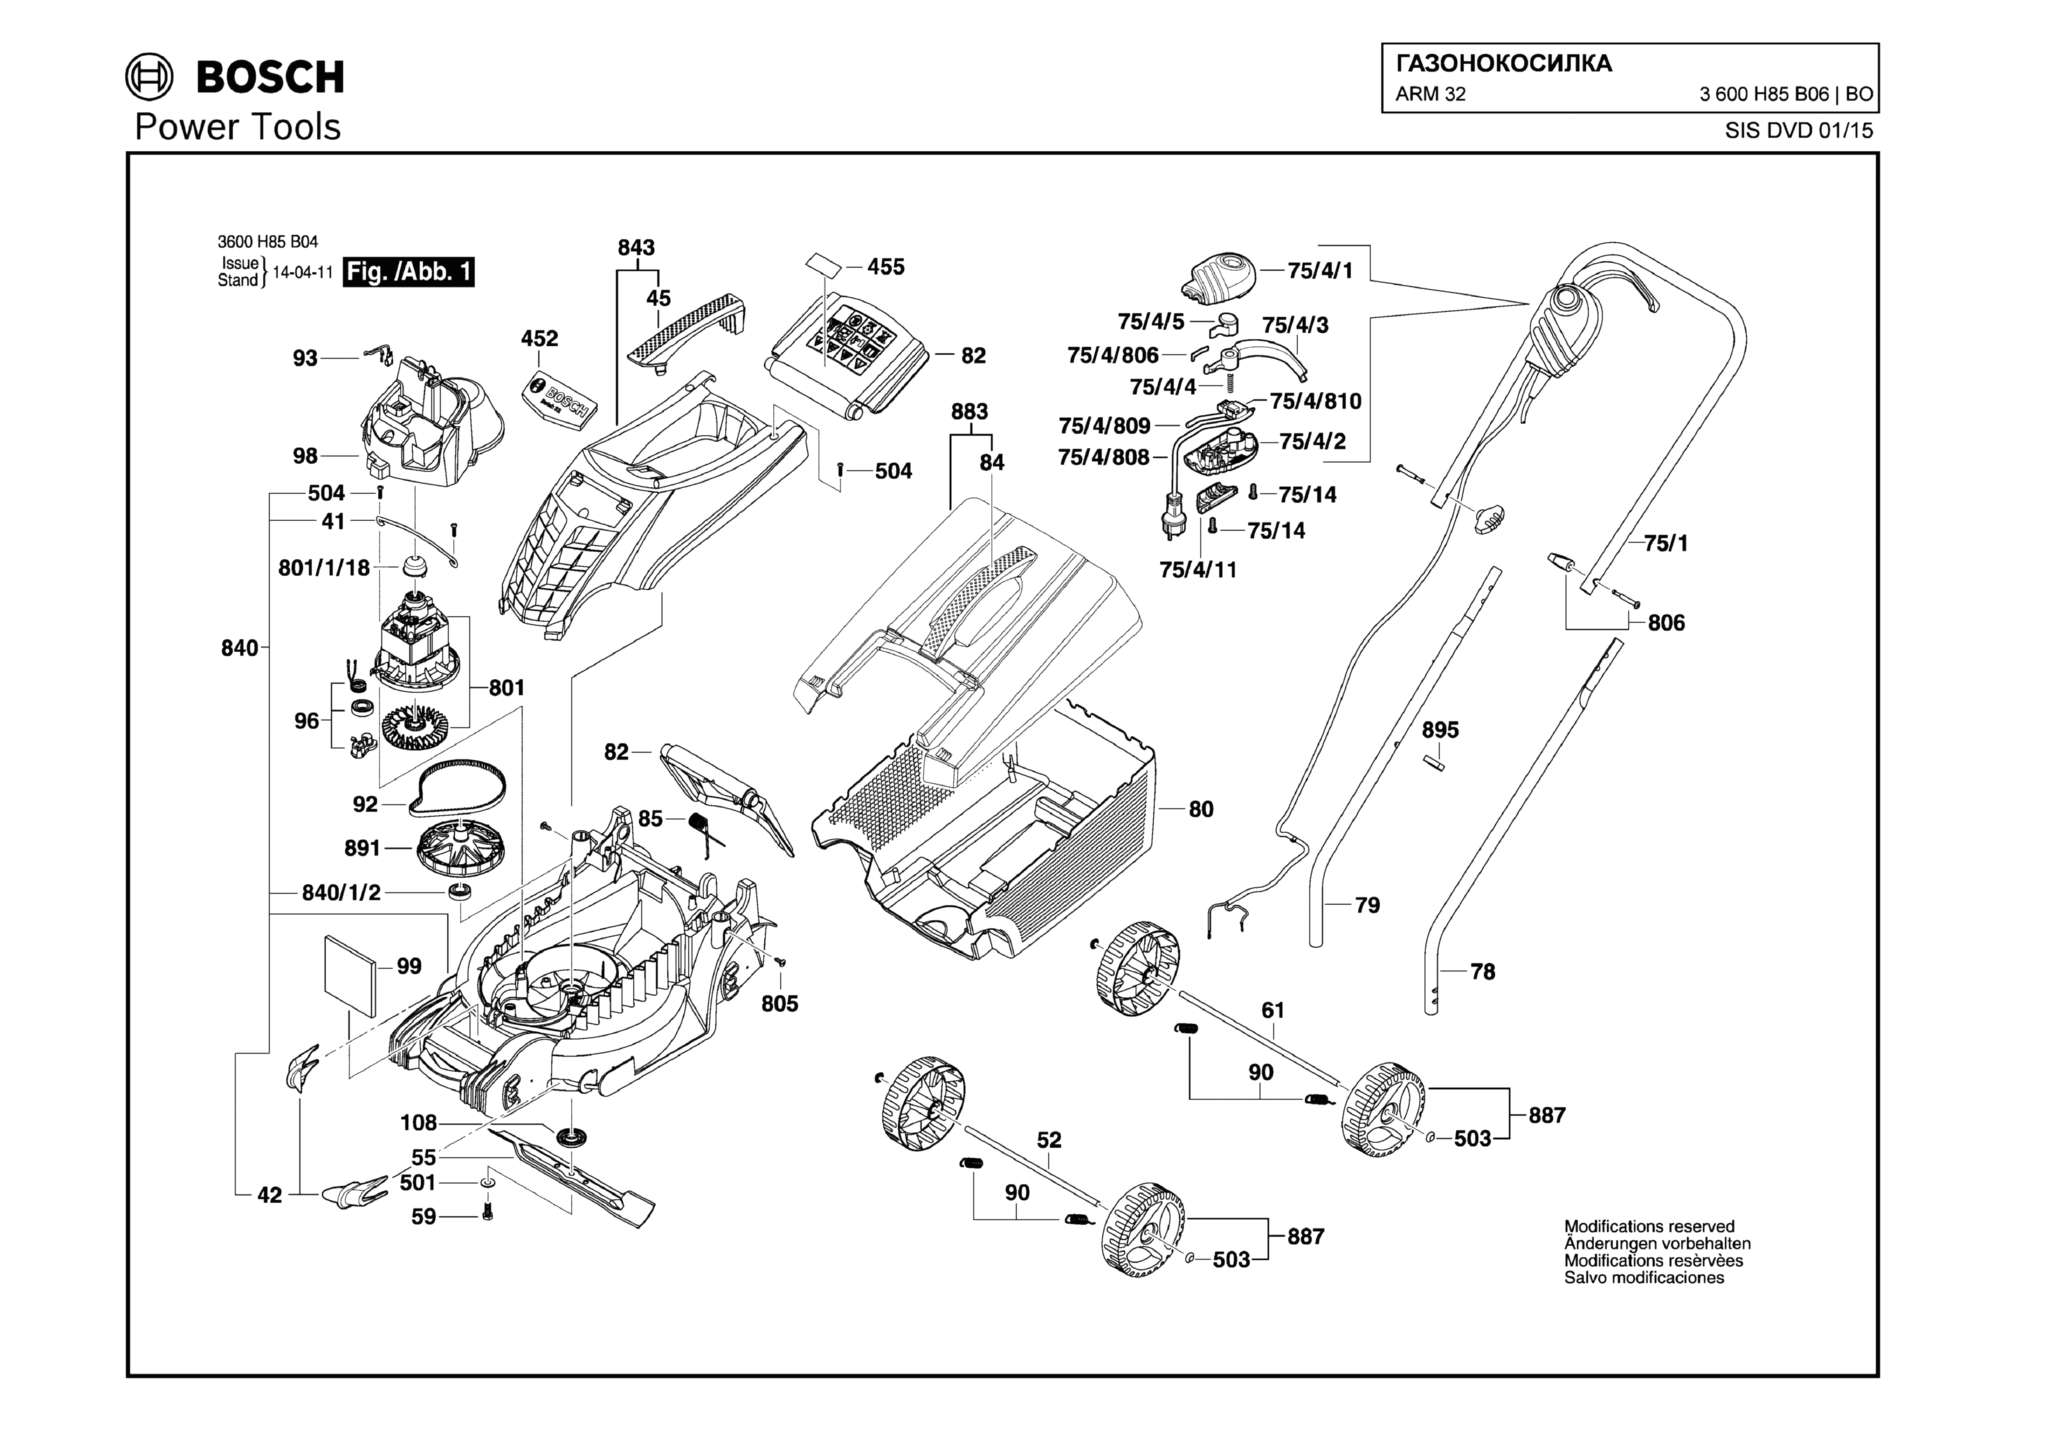 Запчасти, схема и деталировка Bosch ARM 32 (ТИП 3600H85B06)